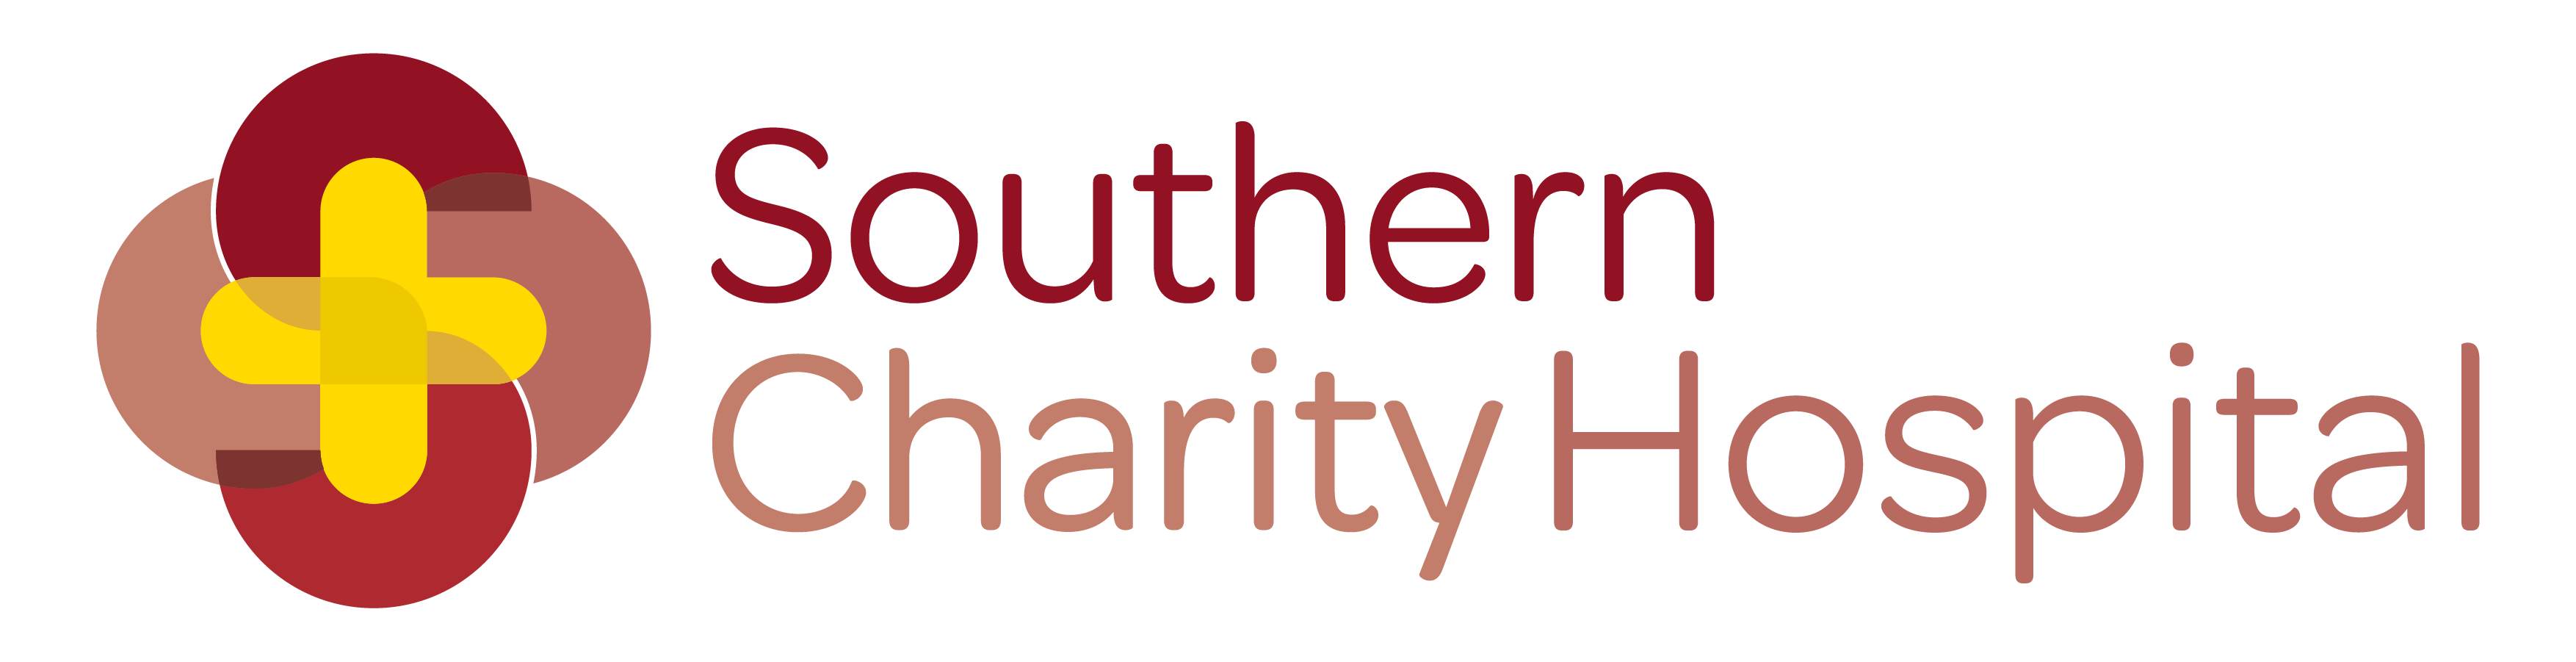 Southern Charity Hospital Logo